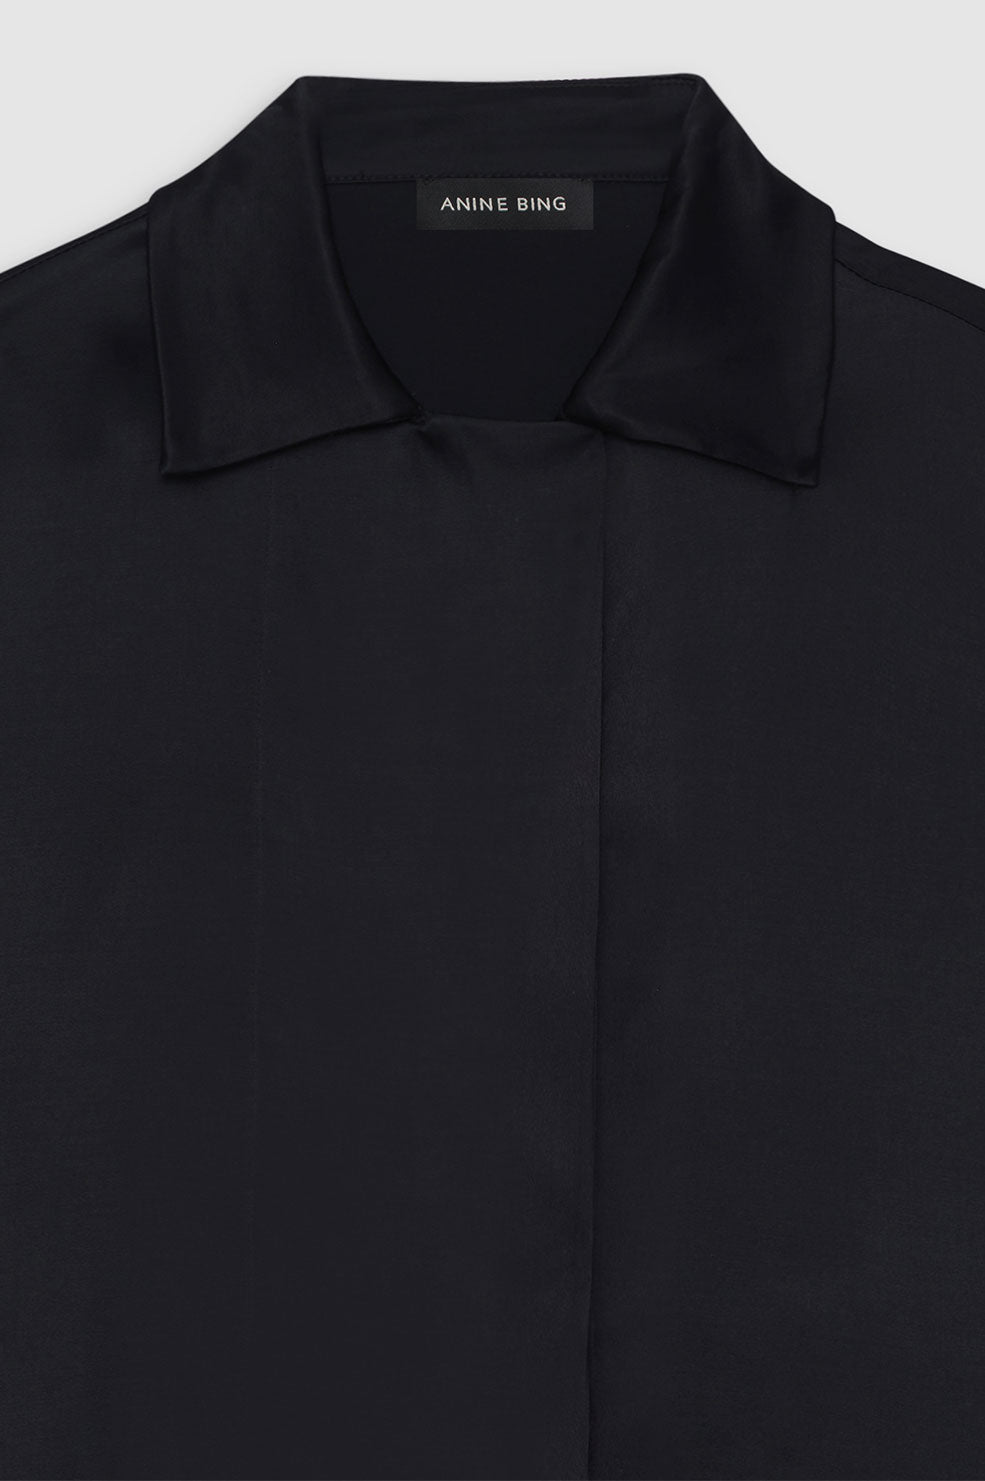 ANINE BING Julia Shirt - Black - Detail View